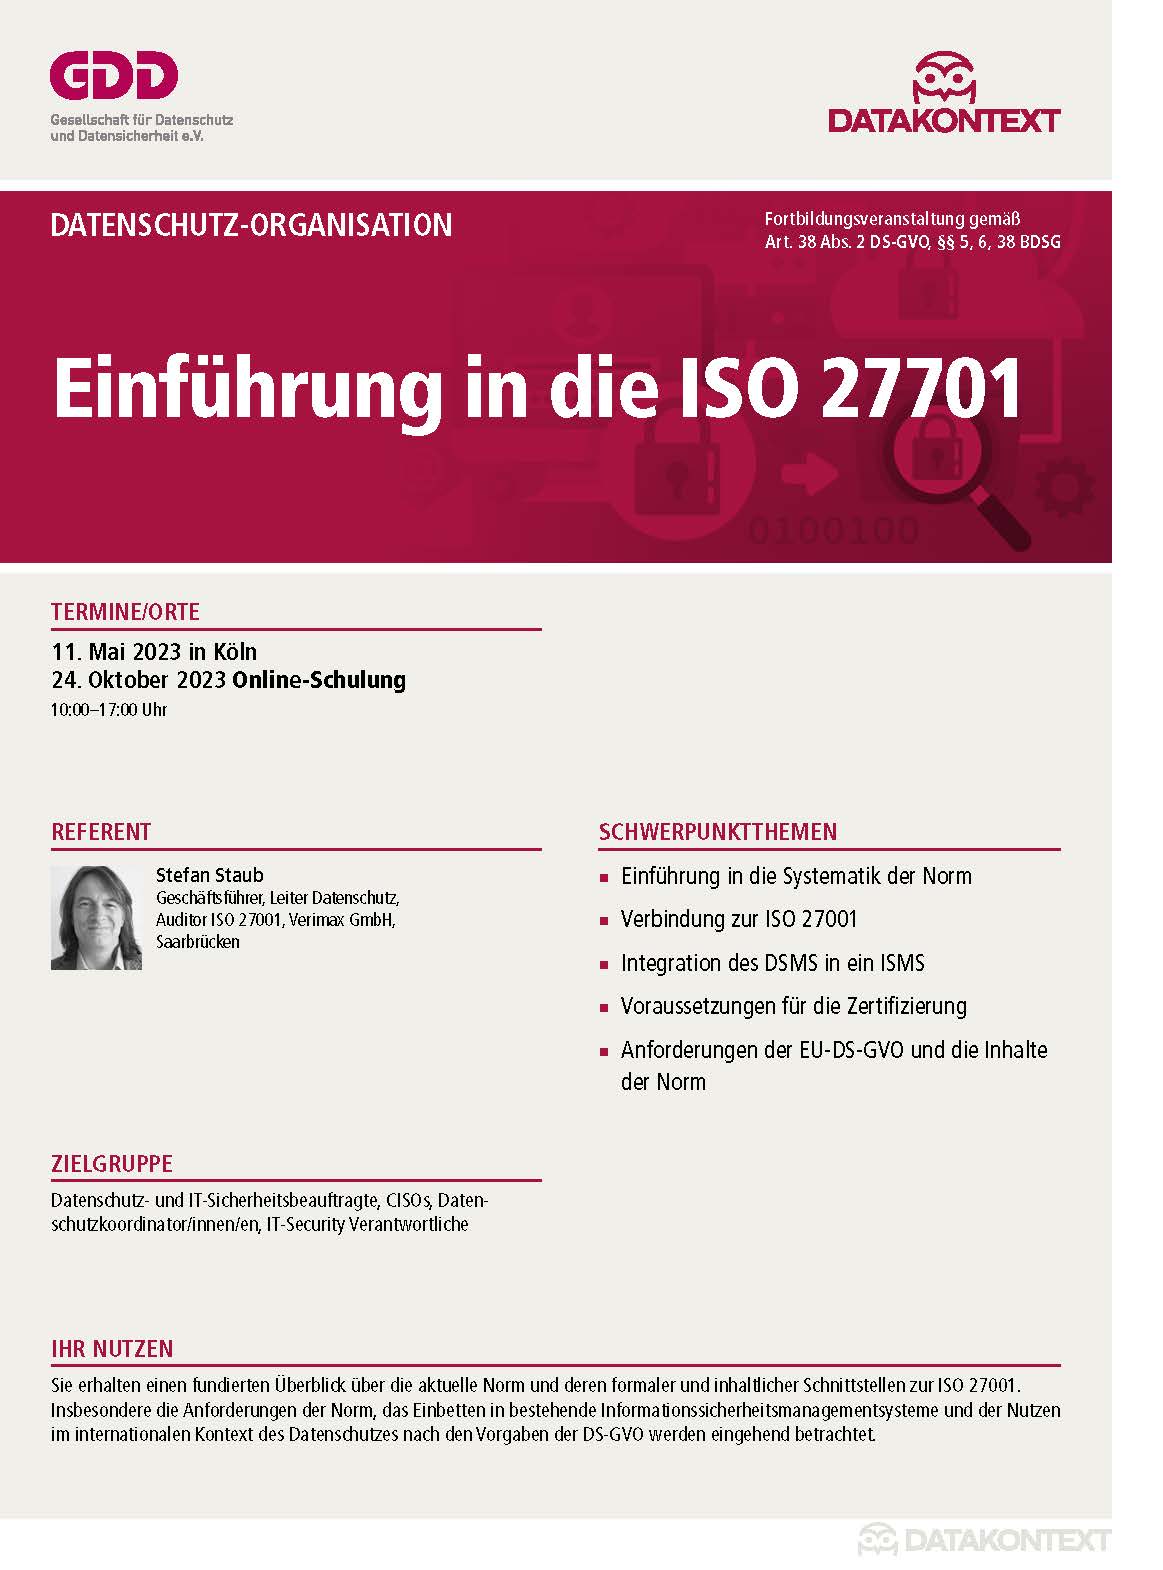 Einführung in die ISO27701